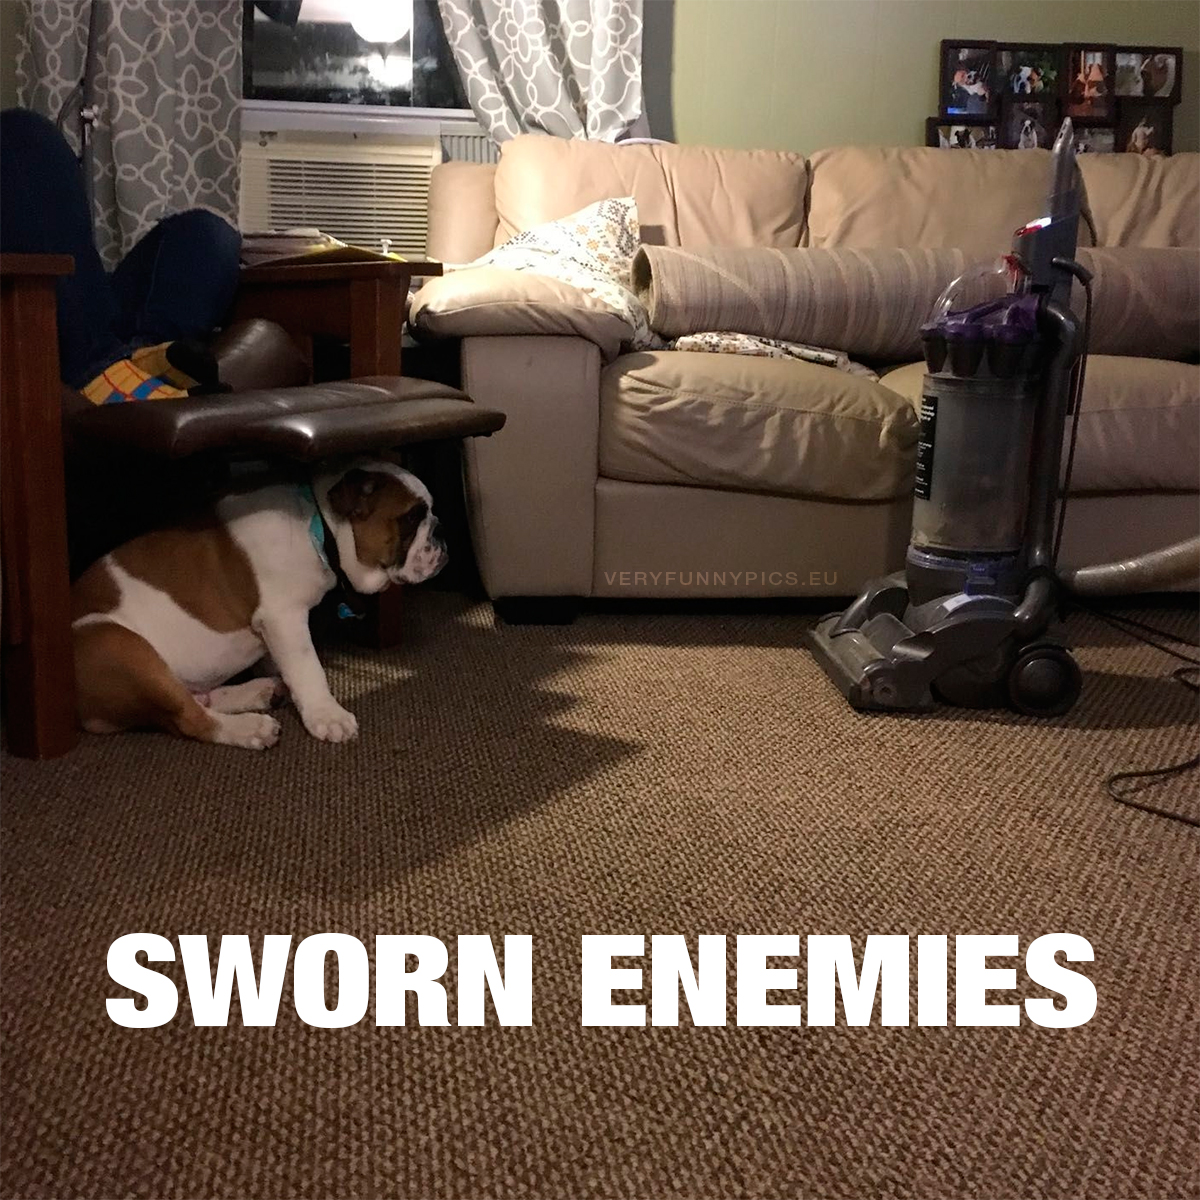 Dog staring at vacuum cleaner - Sworn enemies